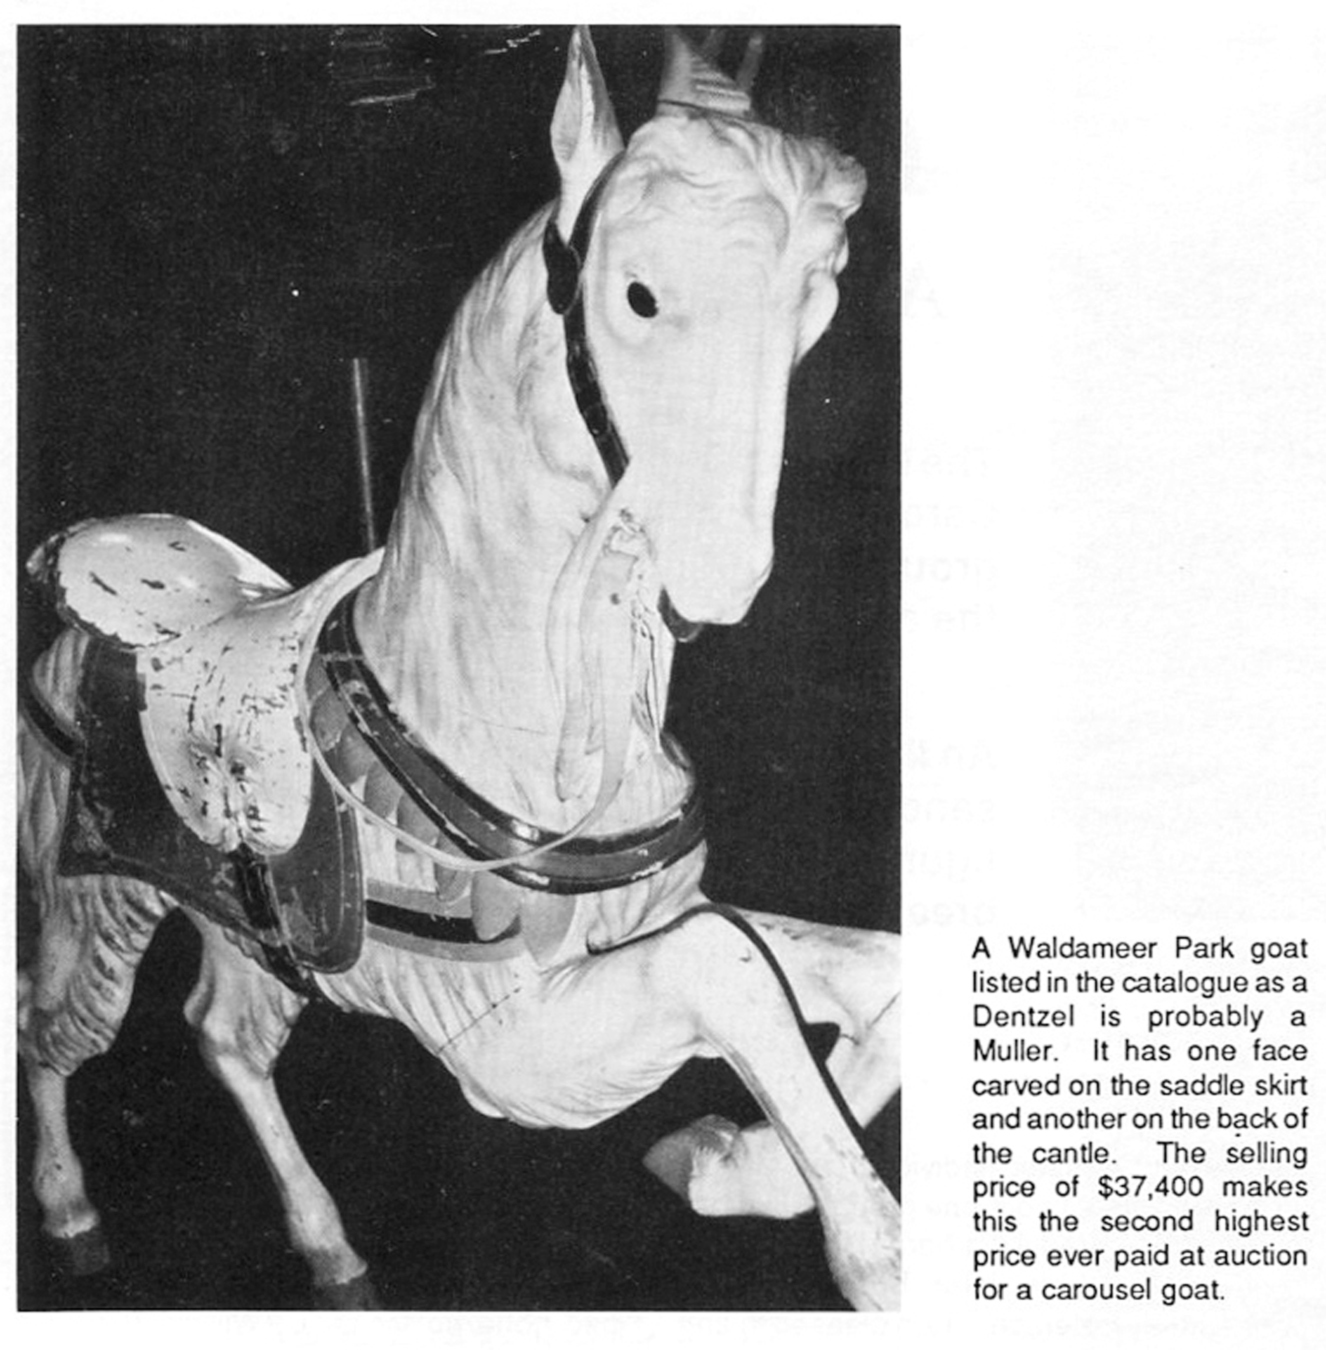 Waldameer-Muller-Dentzel-carousel-goat-Dec-88-auction